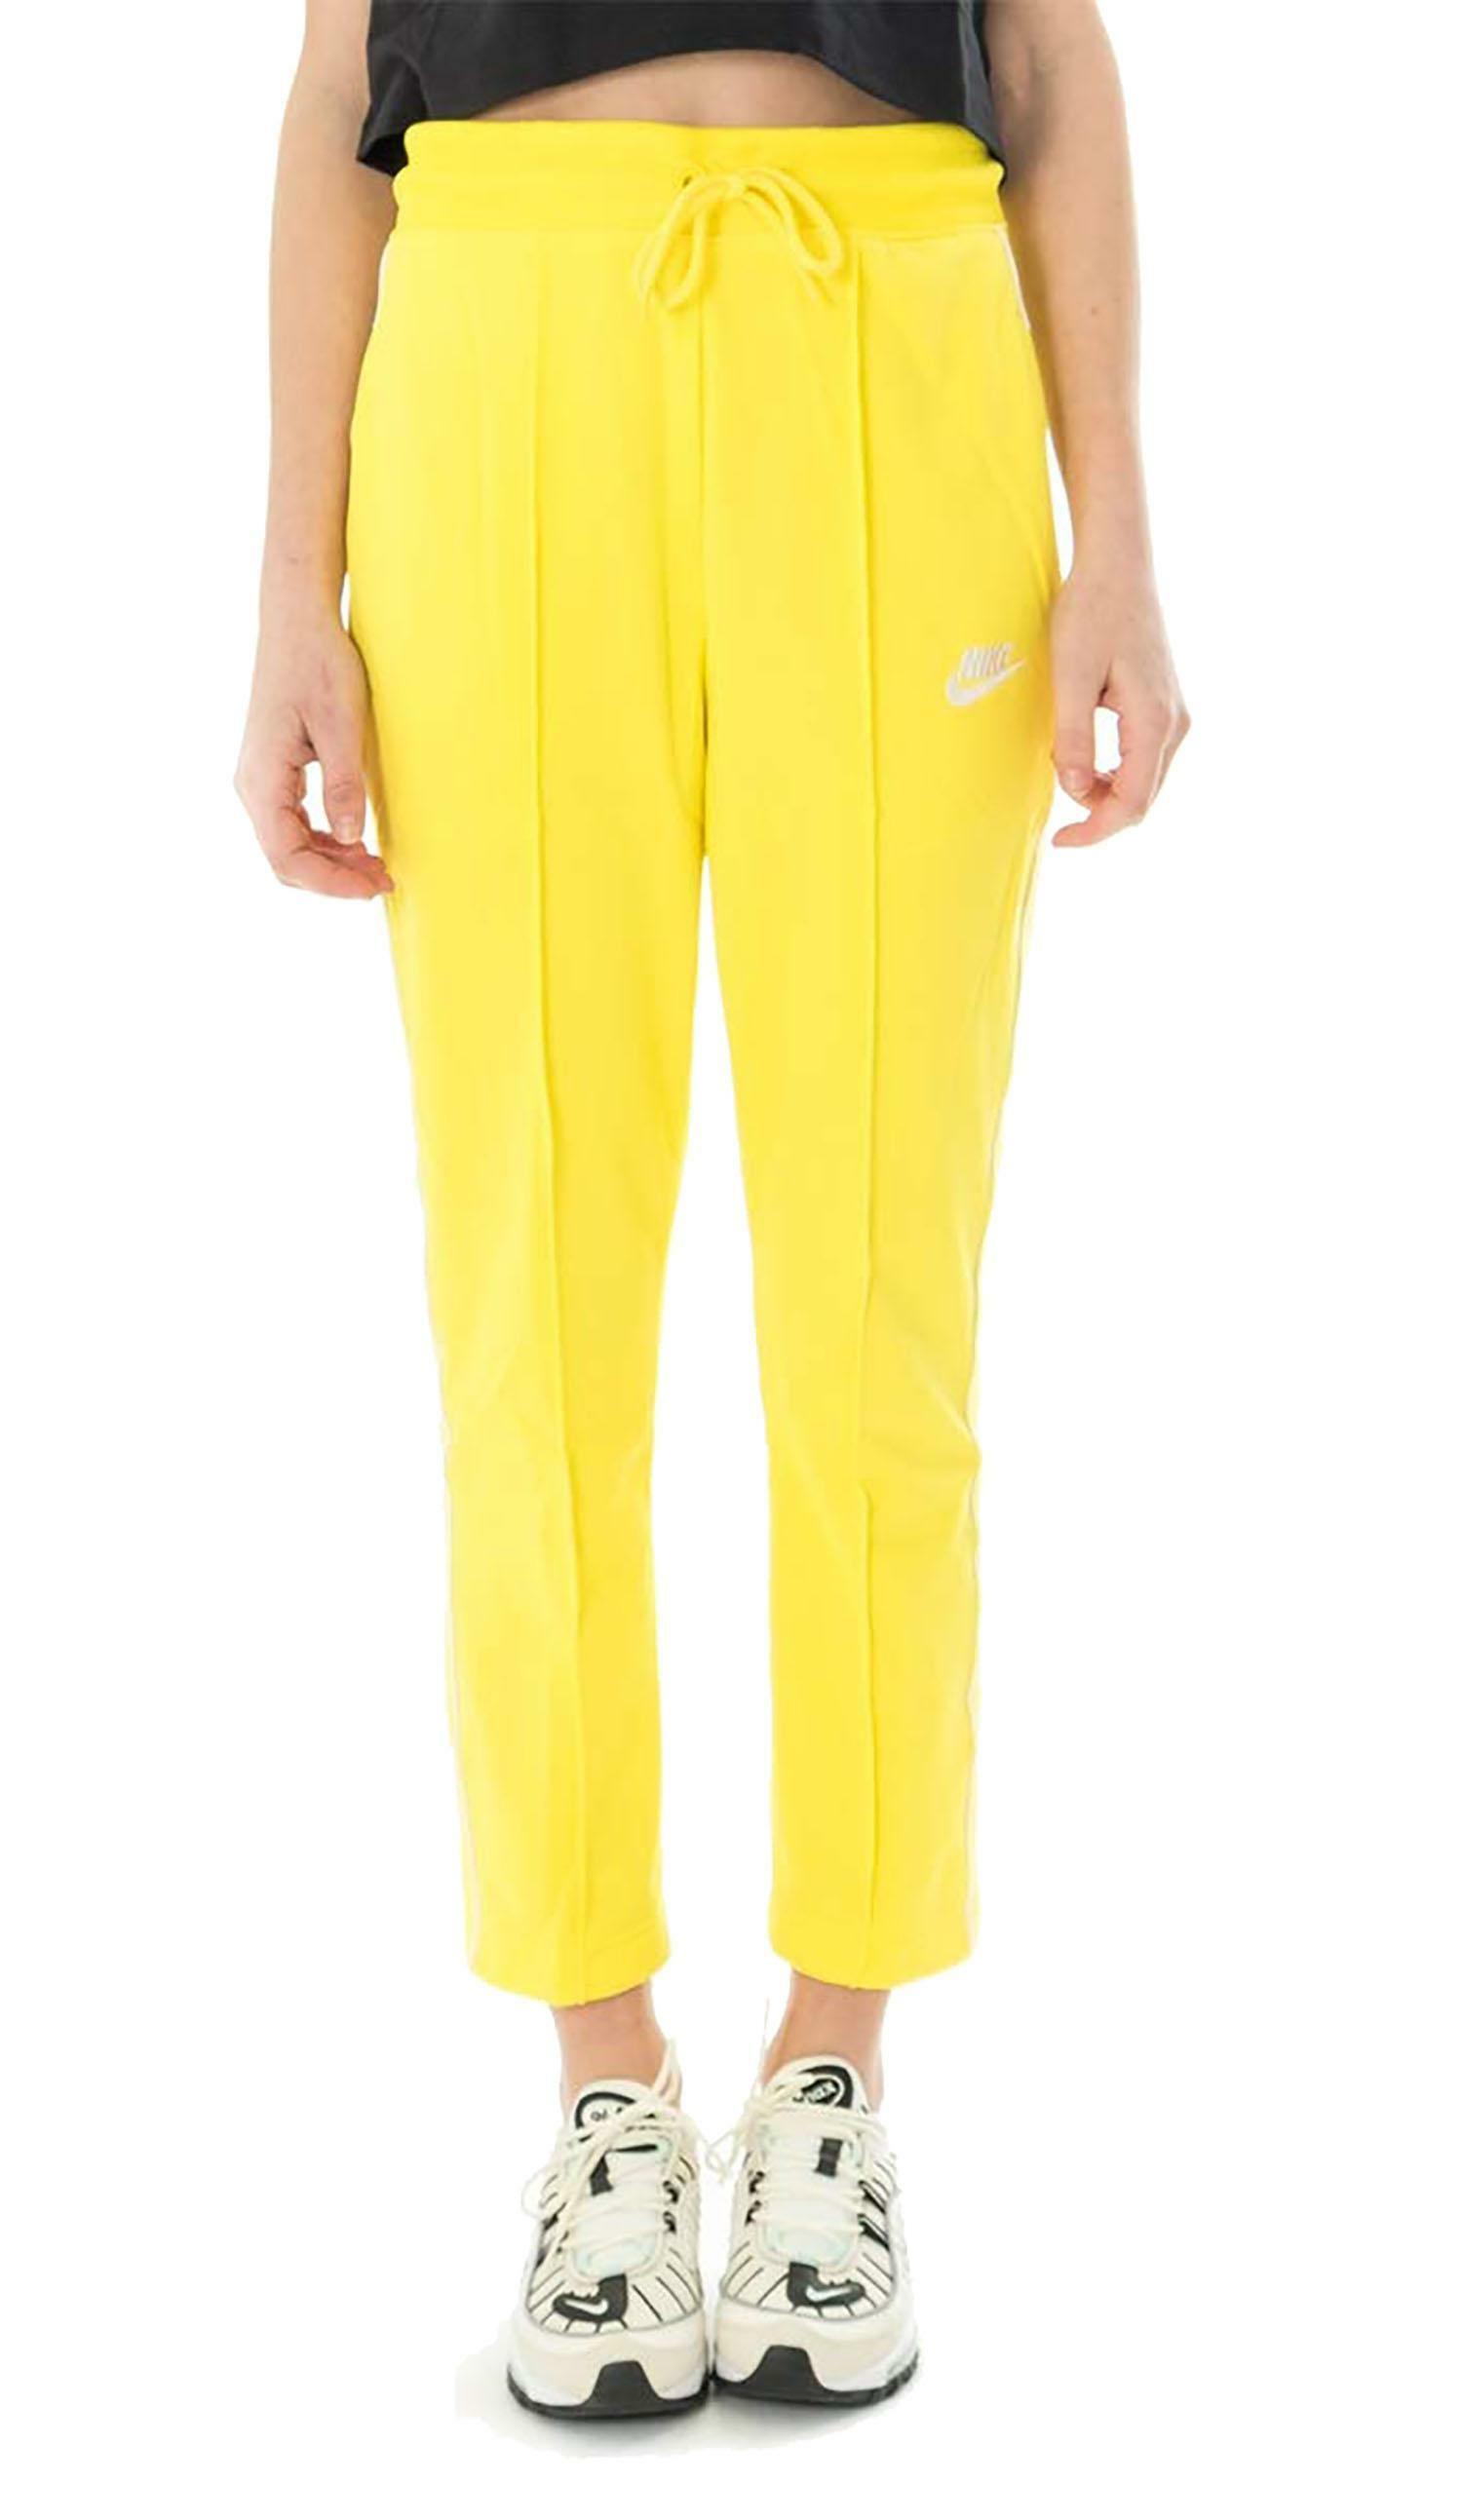 pantalones nike amarillo